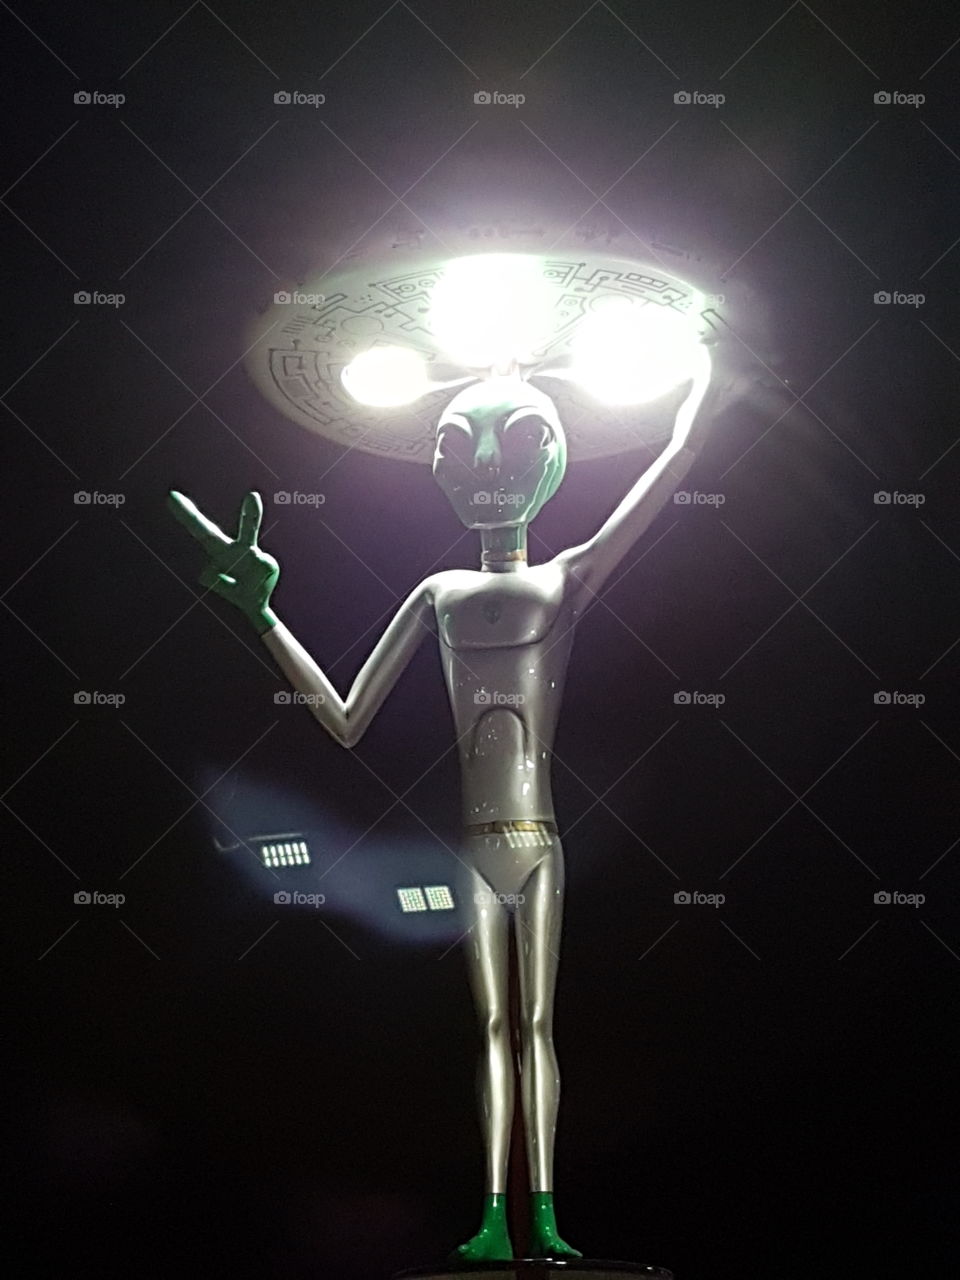 #night
#unique 
#alien
#martian
#green dude